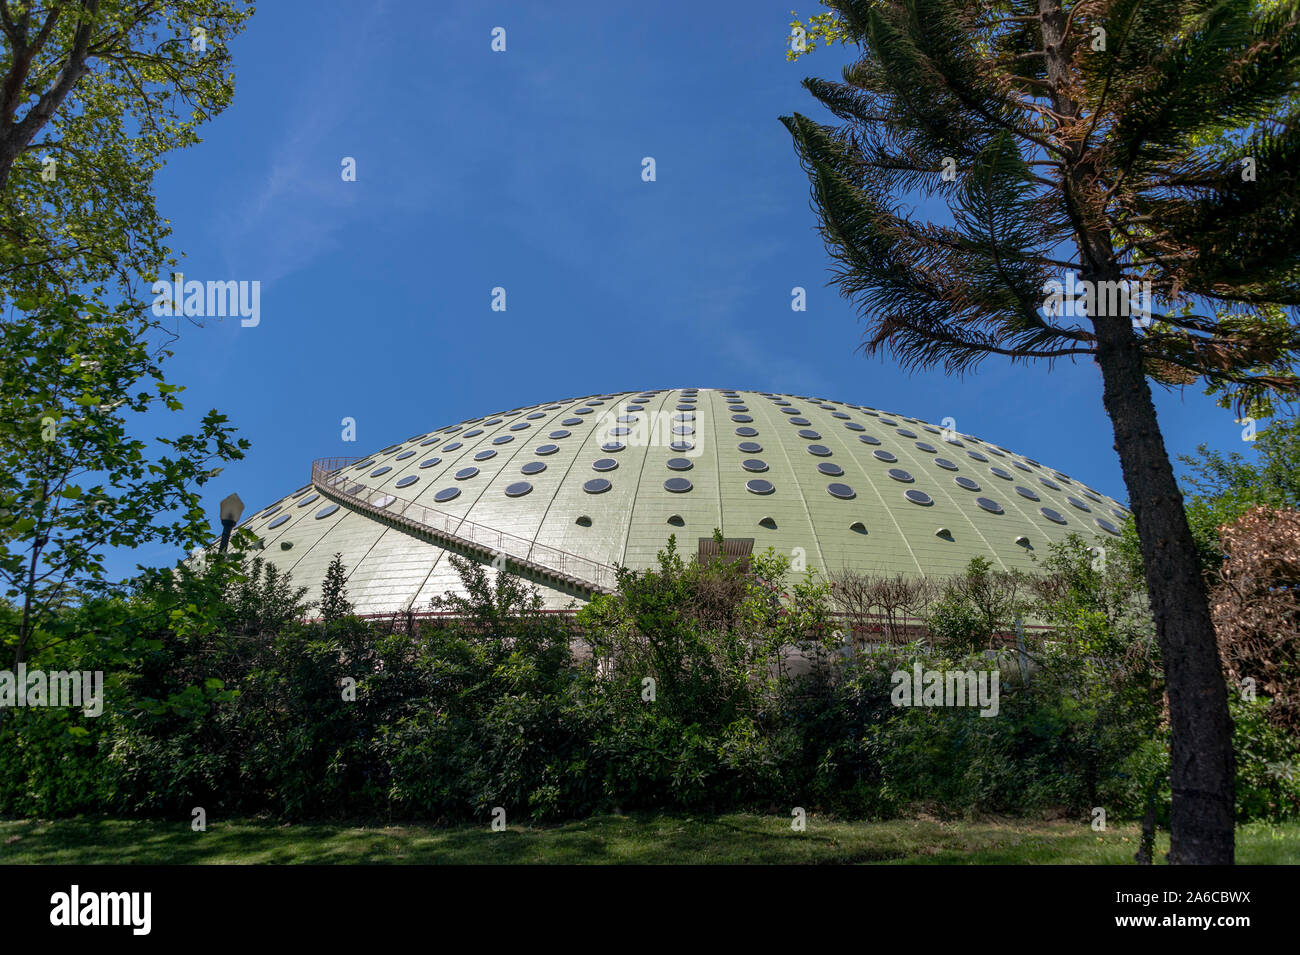 Jardins do Palácio de Cristal, domed sports and event hall. Stock Photo